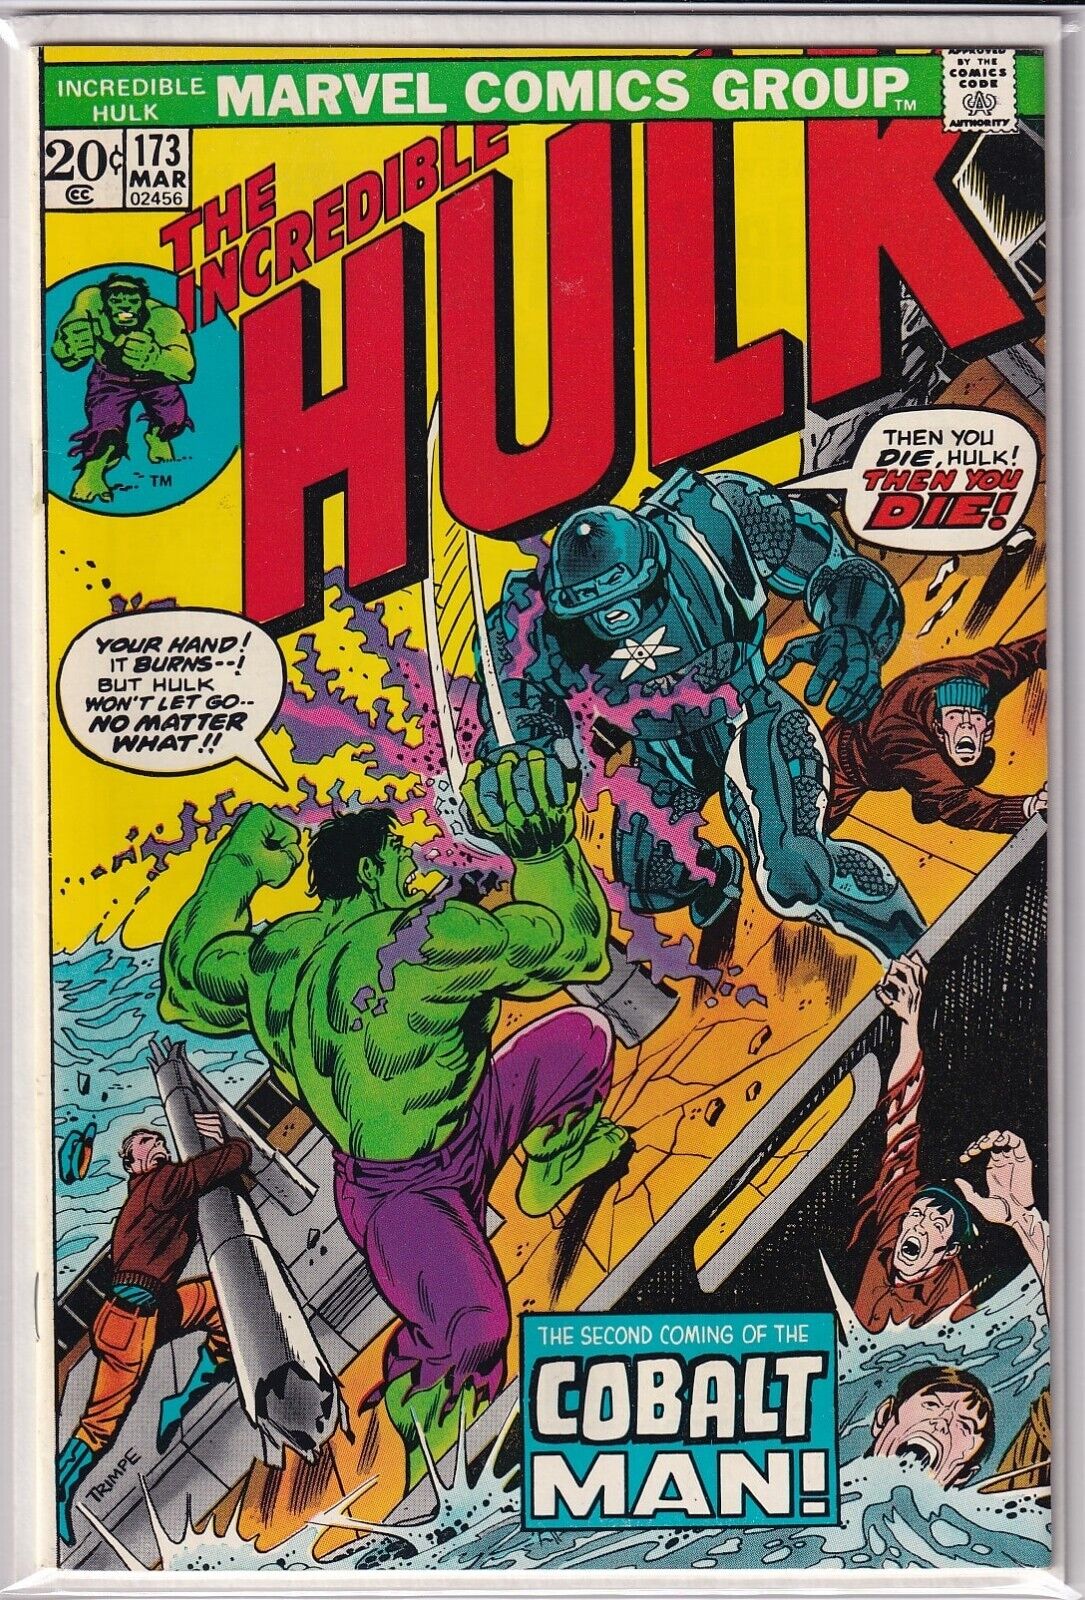 32629: Marvel Comics INCREDIBLE HULK #173 VF Grade